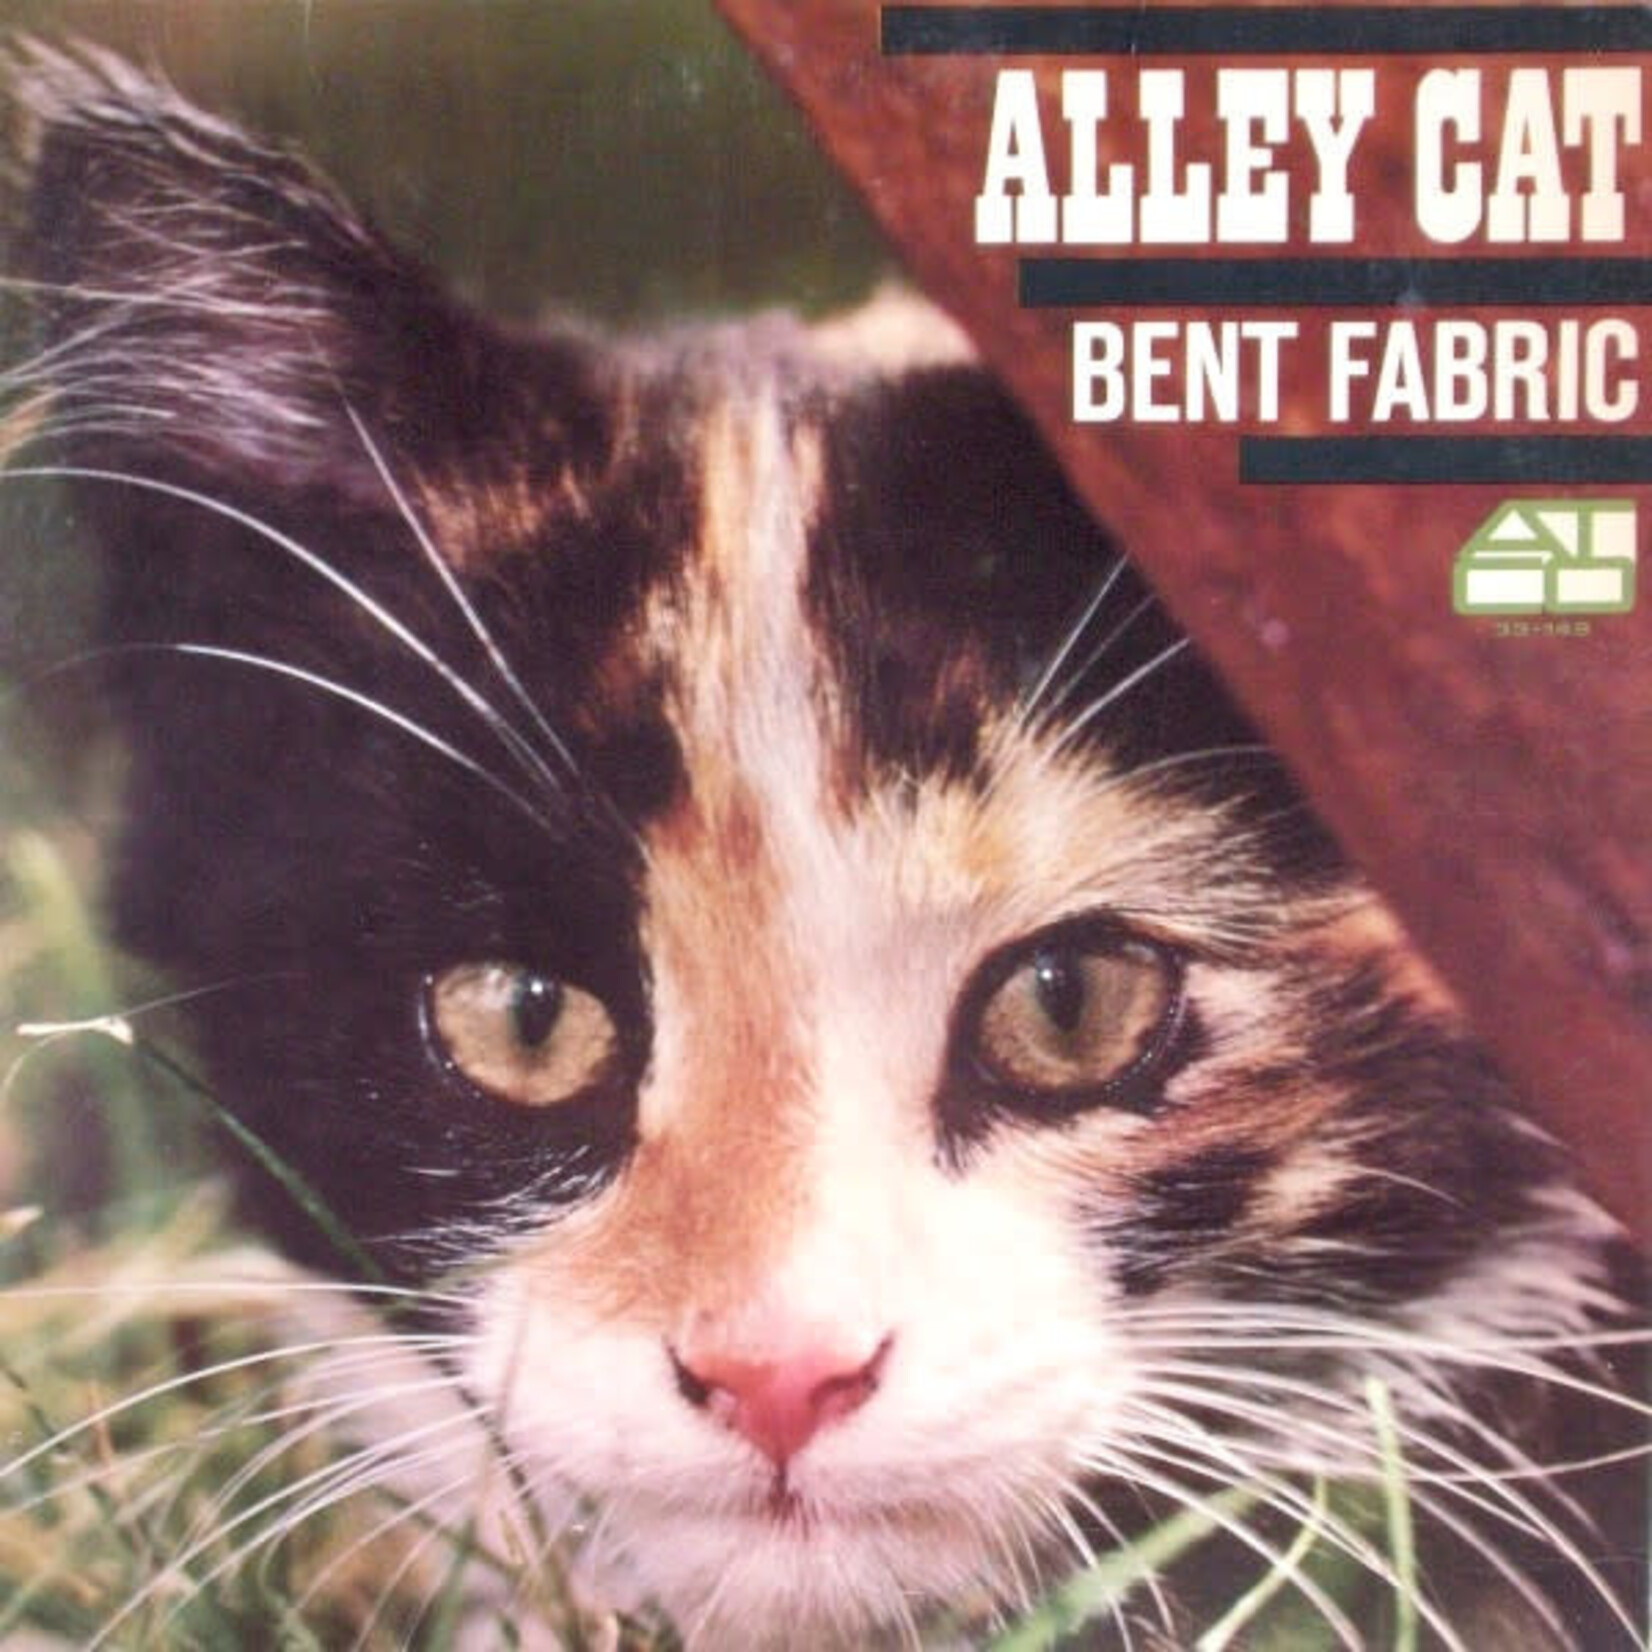 [Vintage] Bent Fabric - Alley Cat